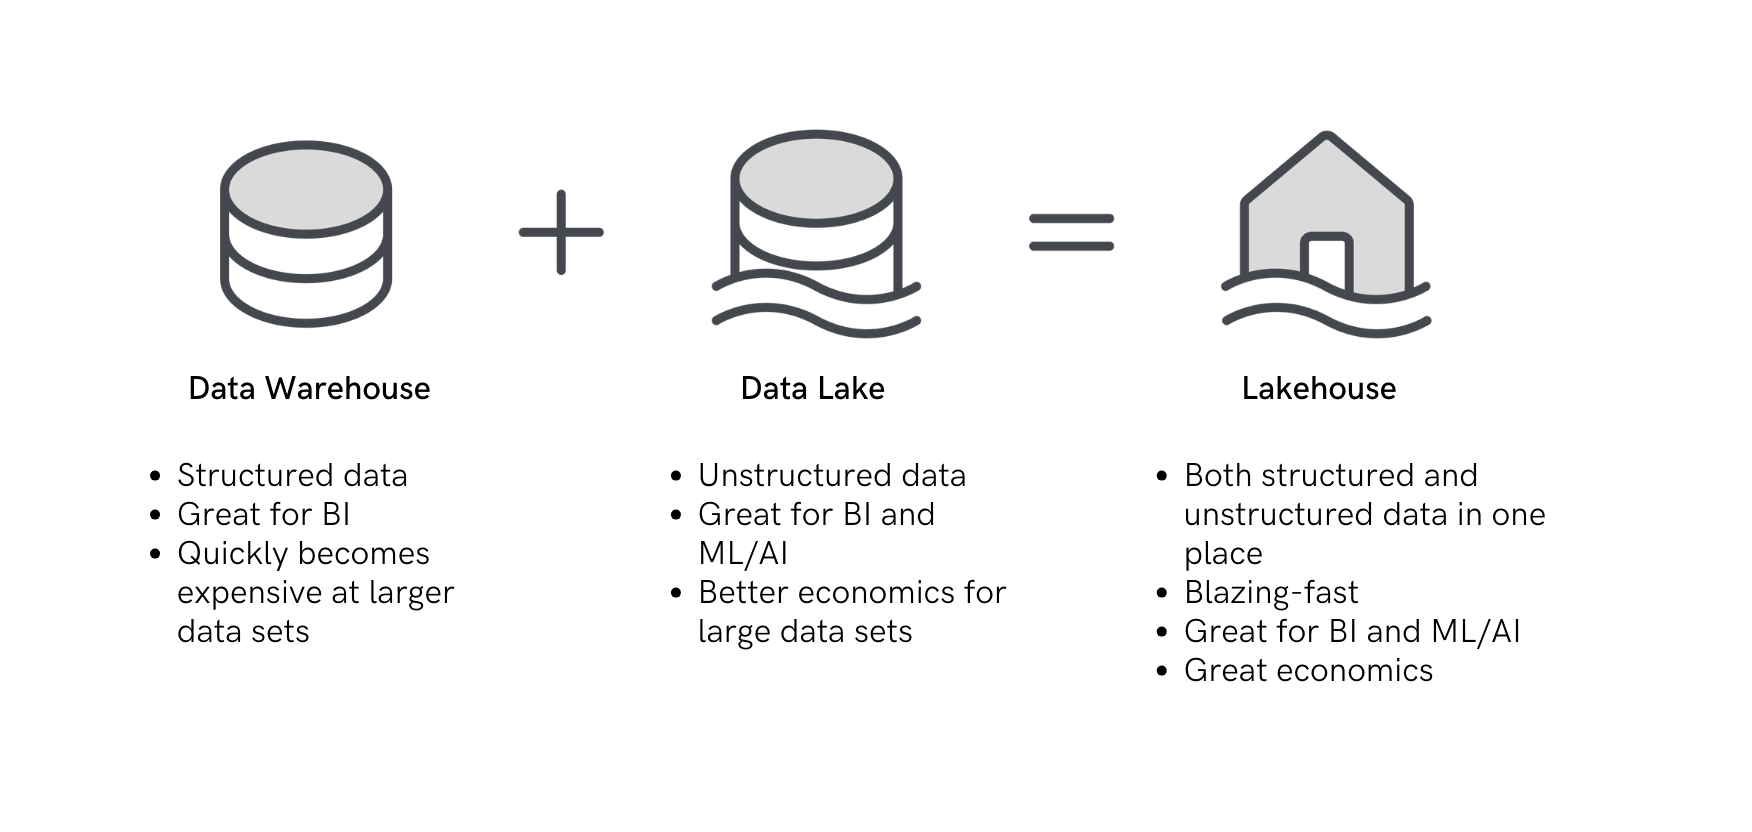 Data Lakehouse Summary